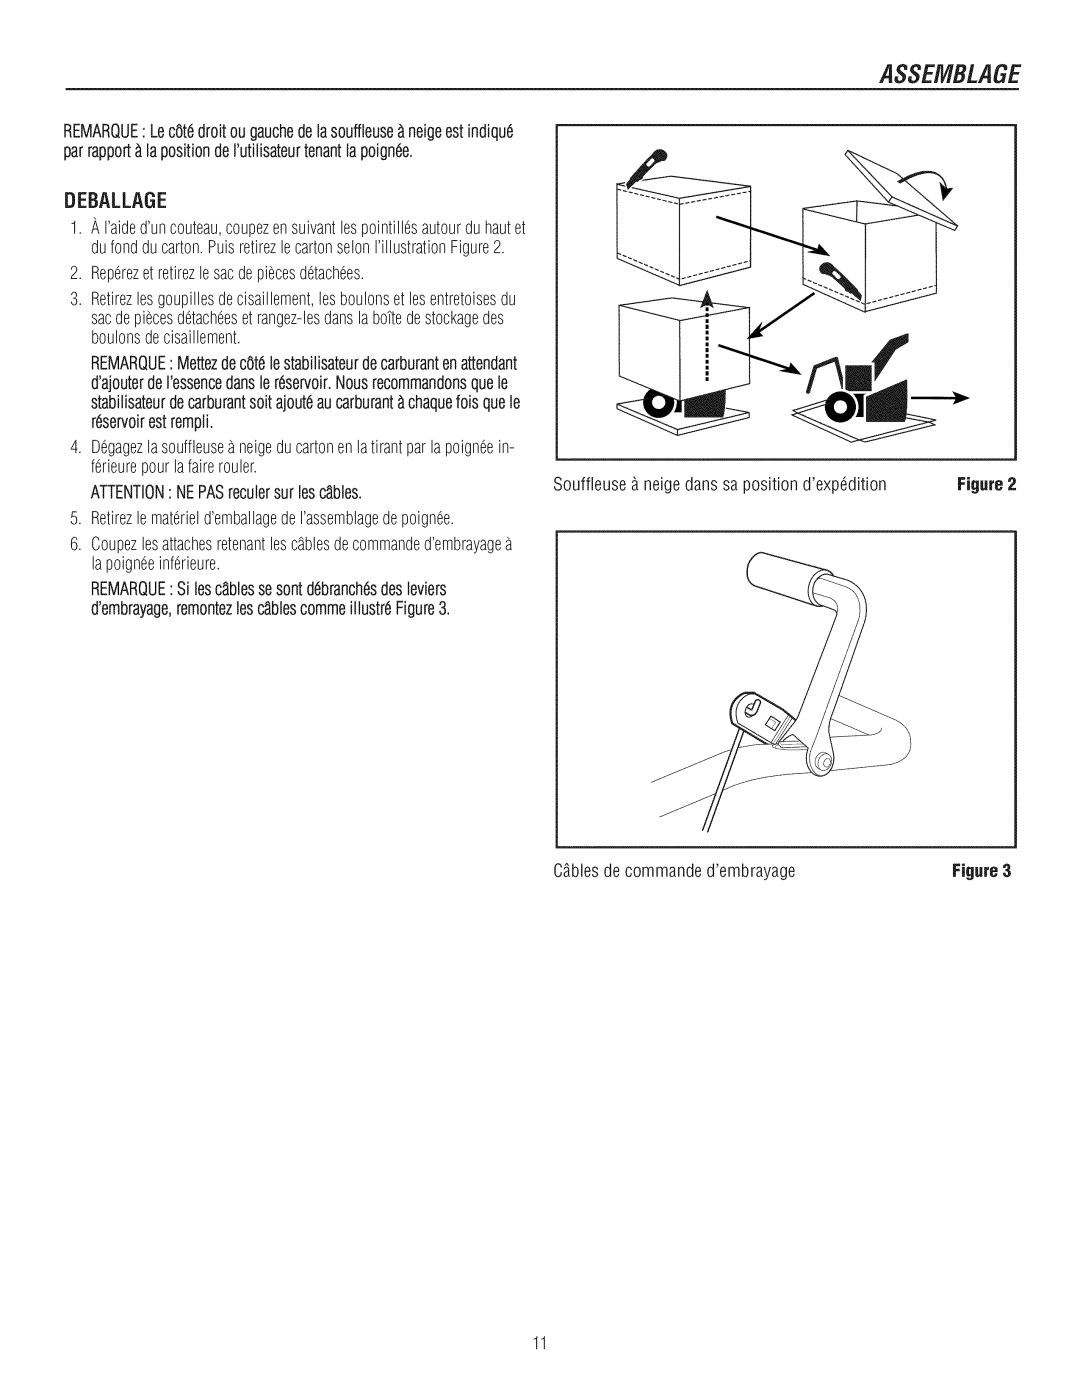 Craftsman C950-52943-0 owner manual Assemblage, Deballage, Figure 